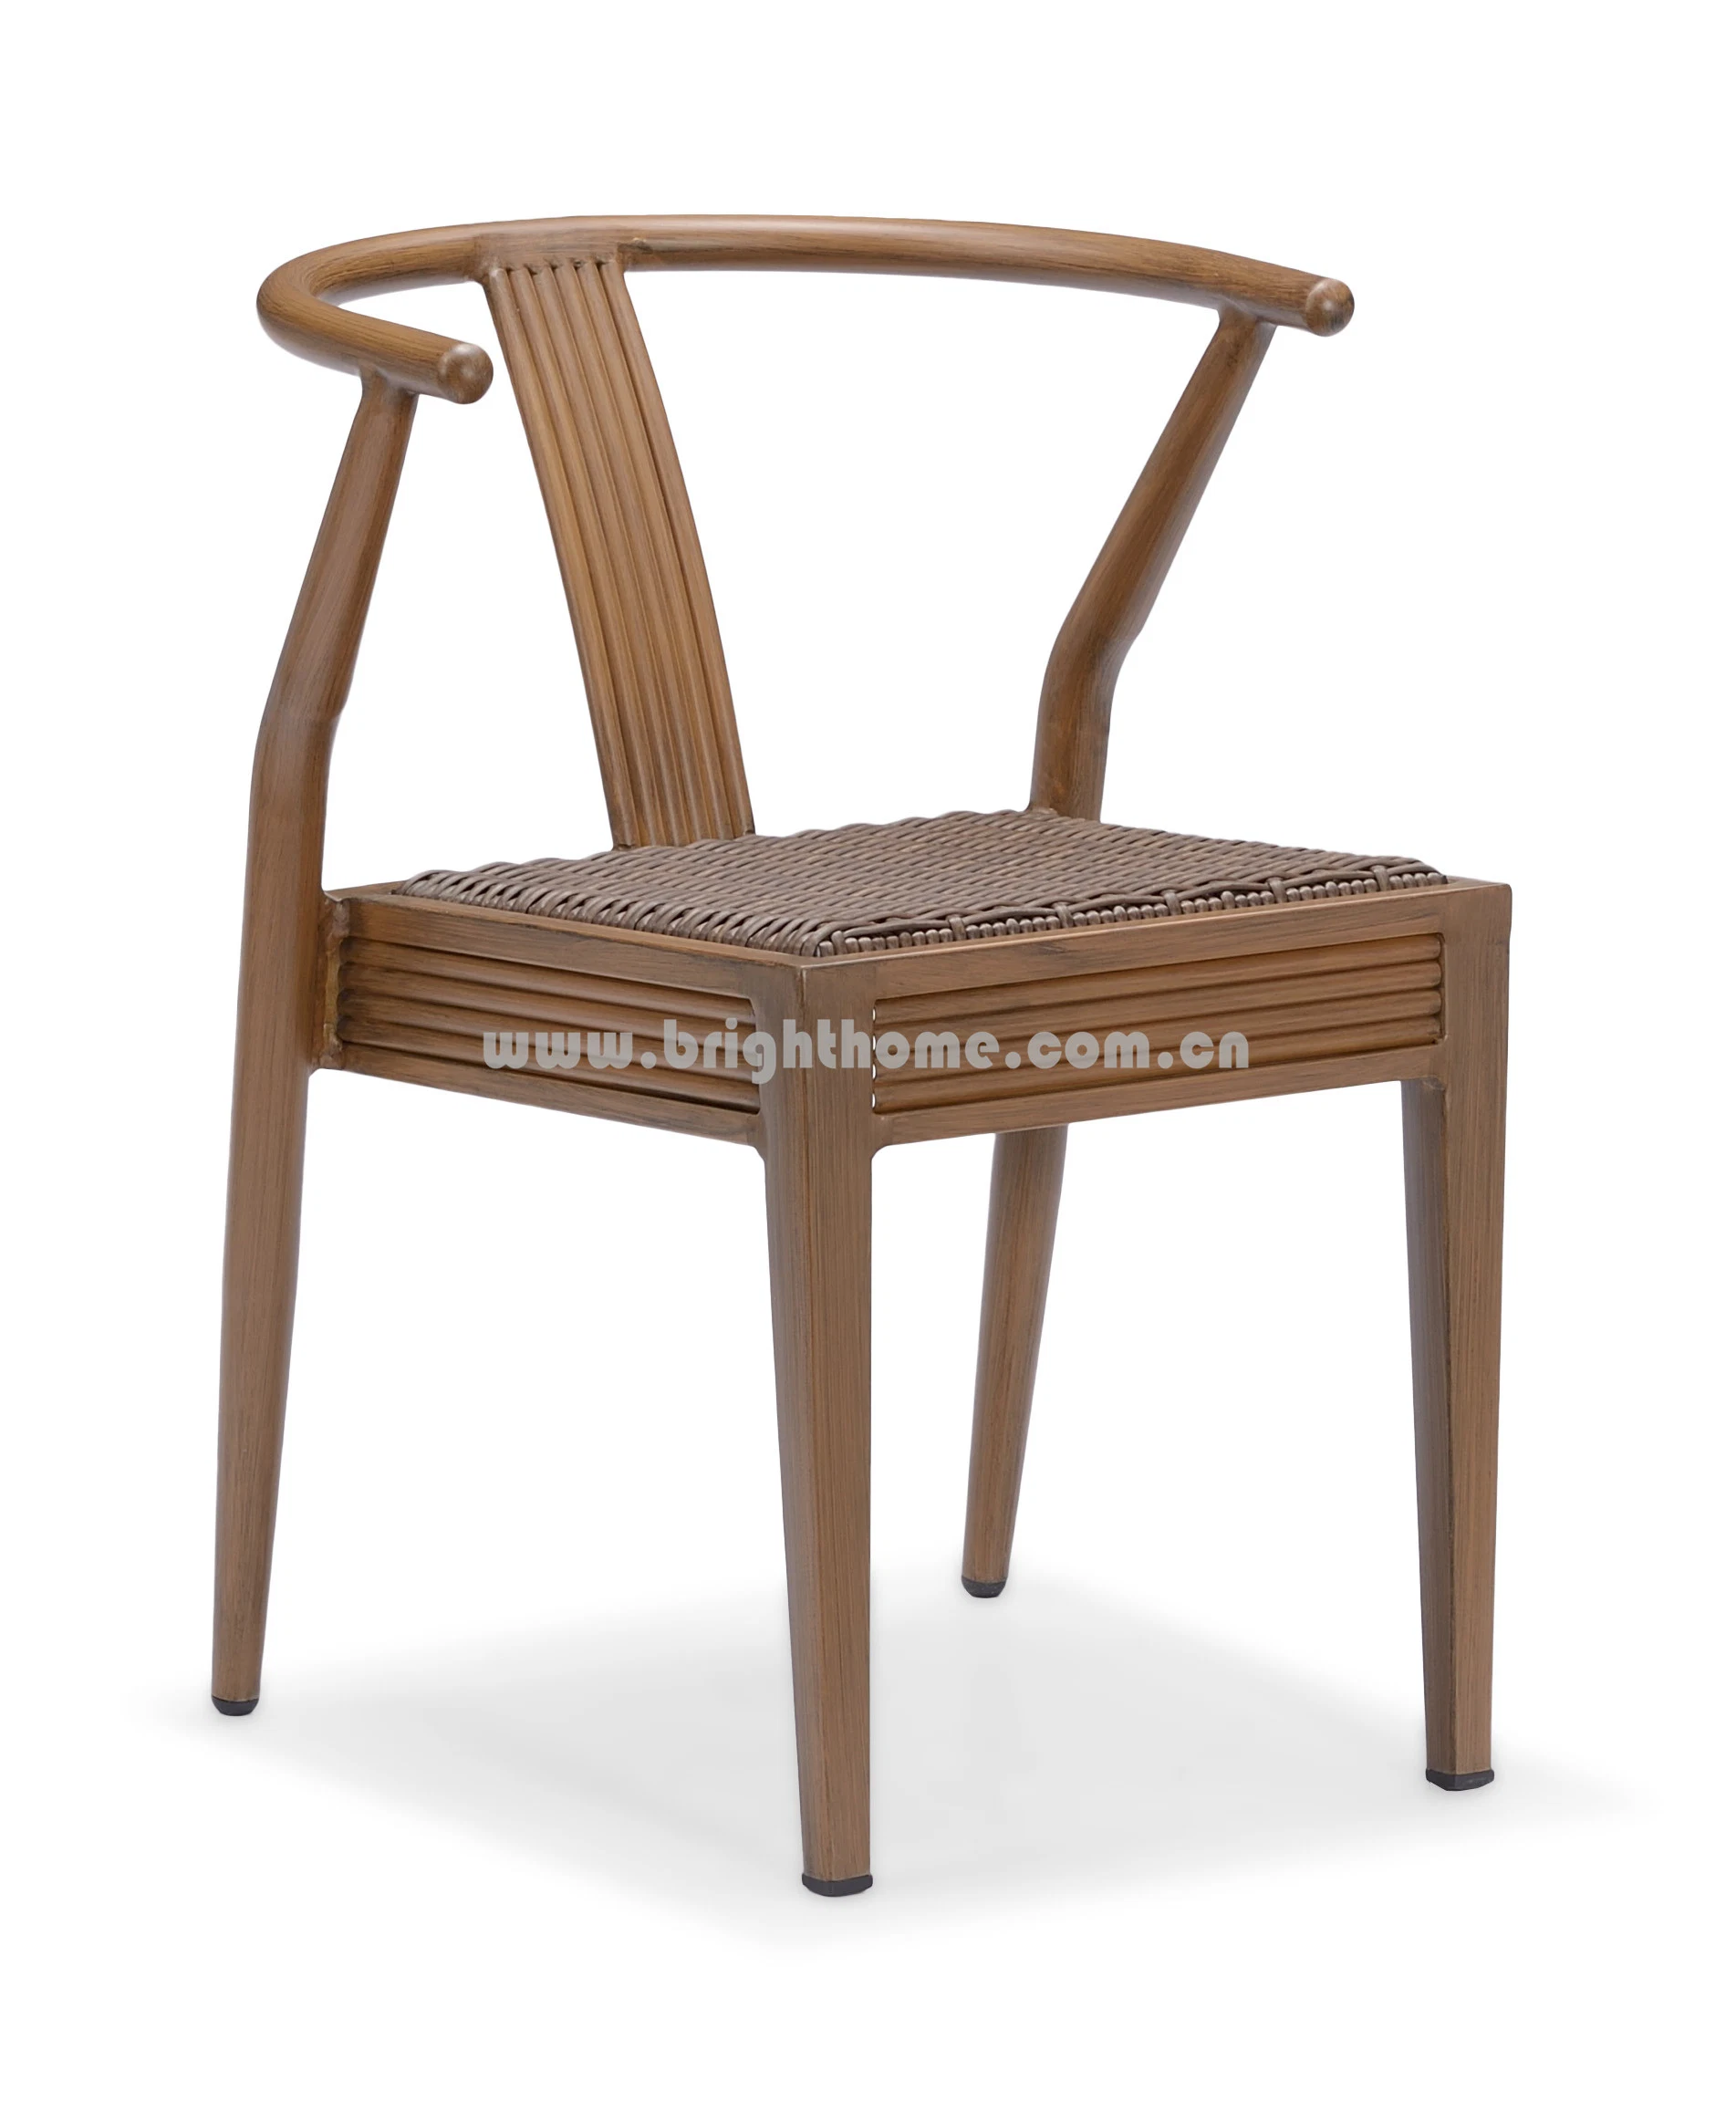 Aluminium PE Teak Wood Finished Rattan Wicker Outdoor Chair Furniture